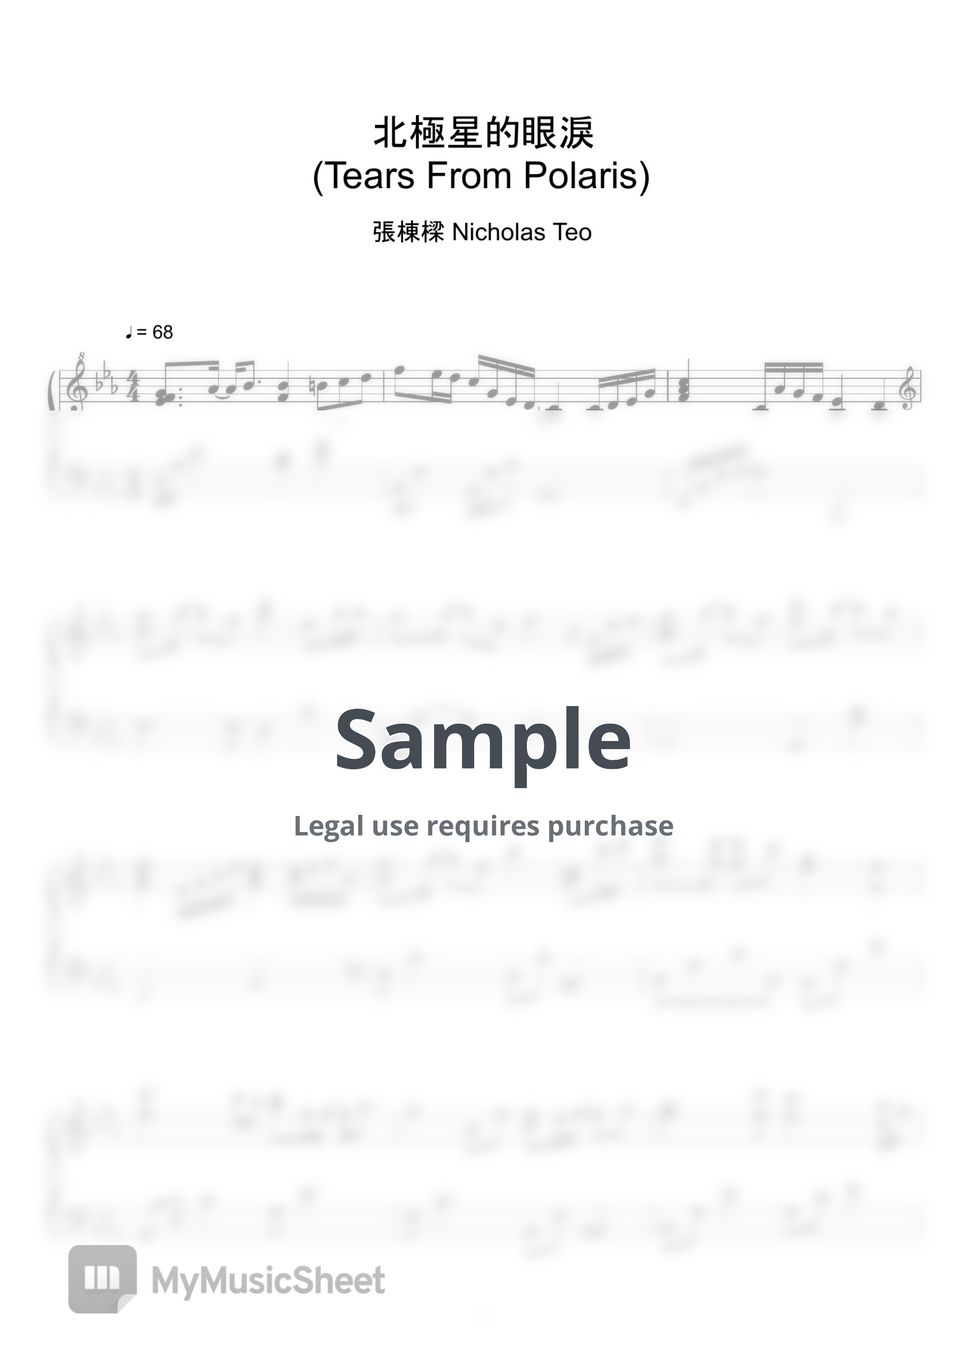 張棟樑 (Nicholas Teo) - 北極星的眼淚 (Tears From Polaris) (Sheet Music, MIDI,) by sayu